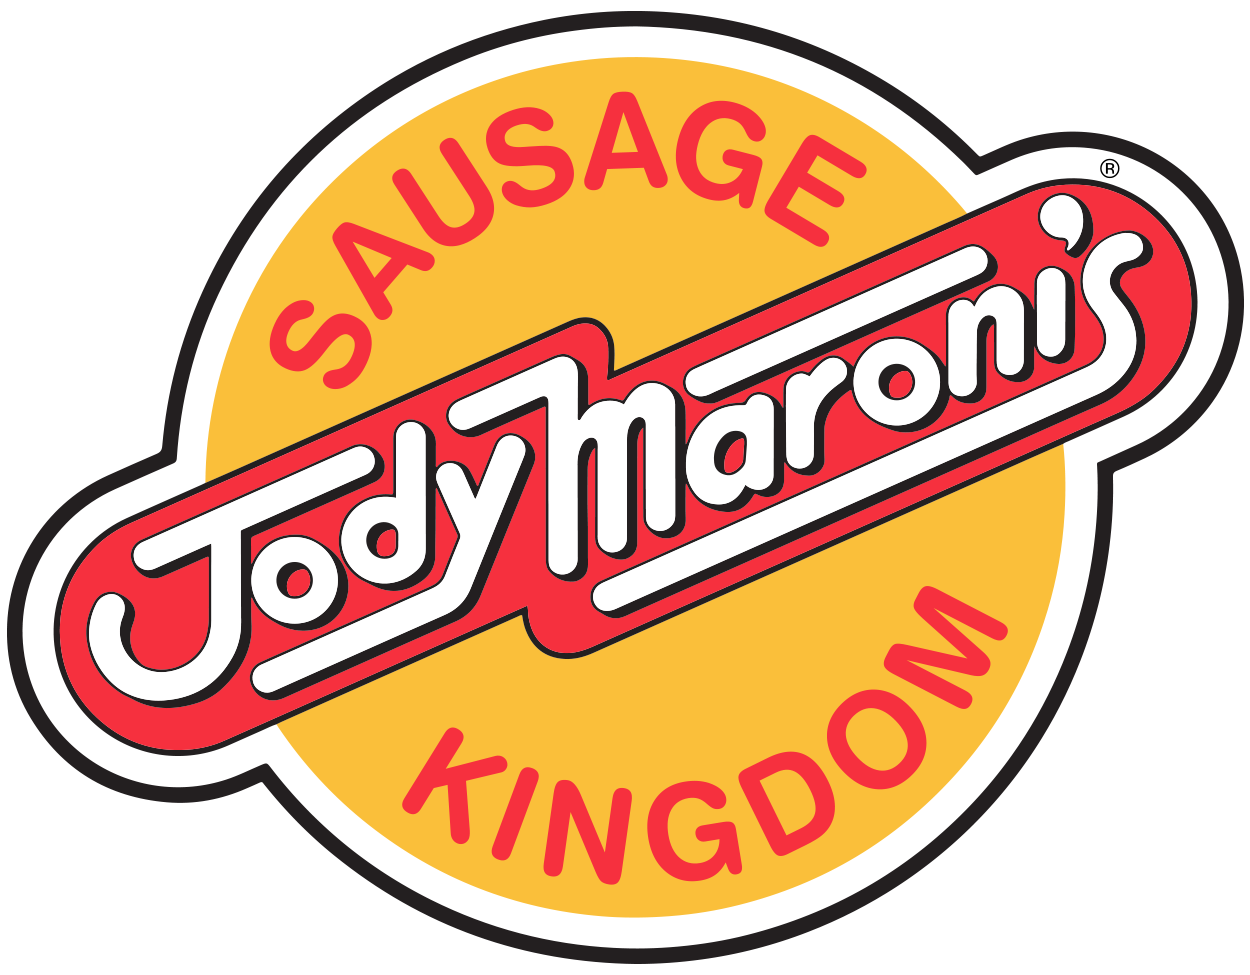 Jody Maroni's